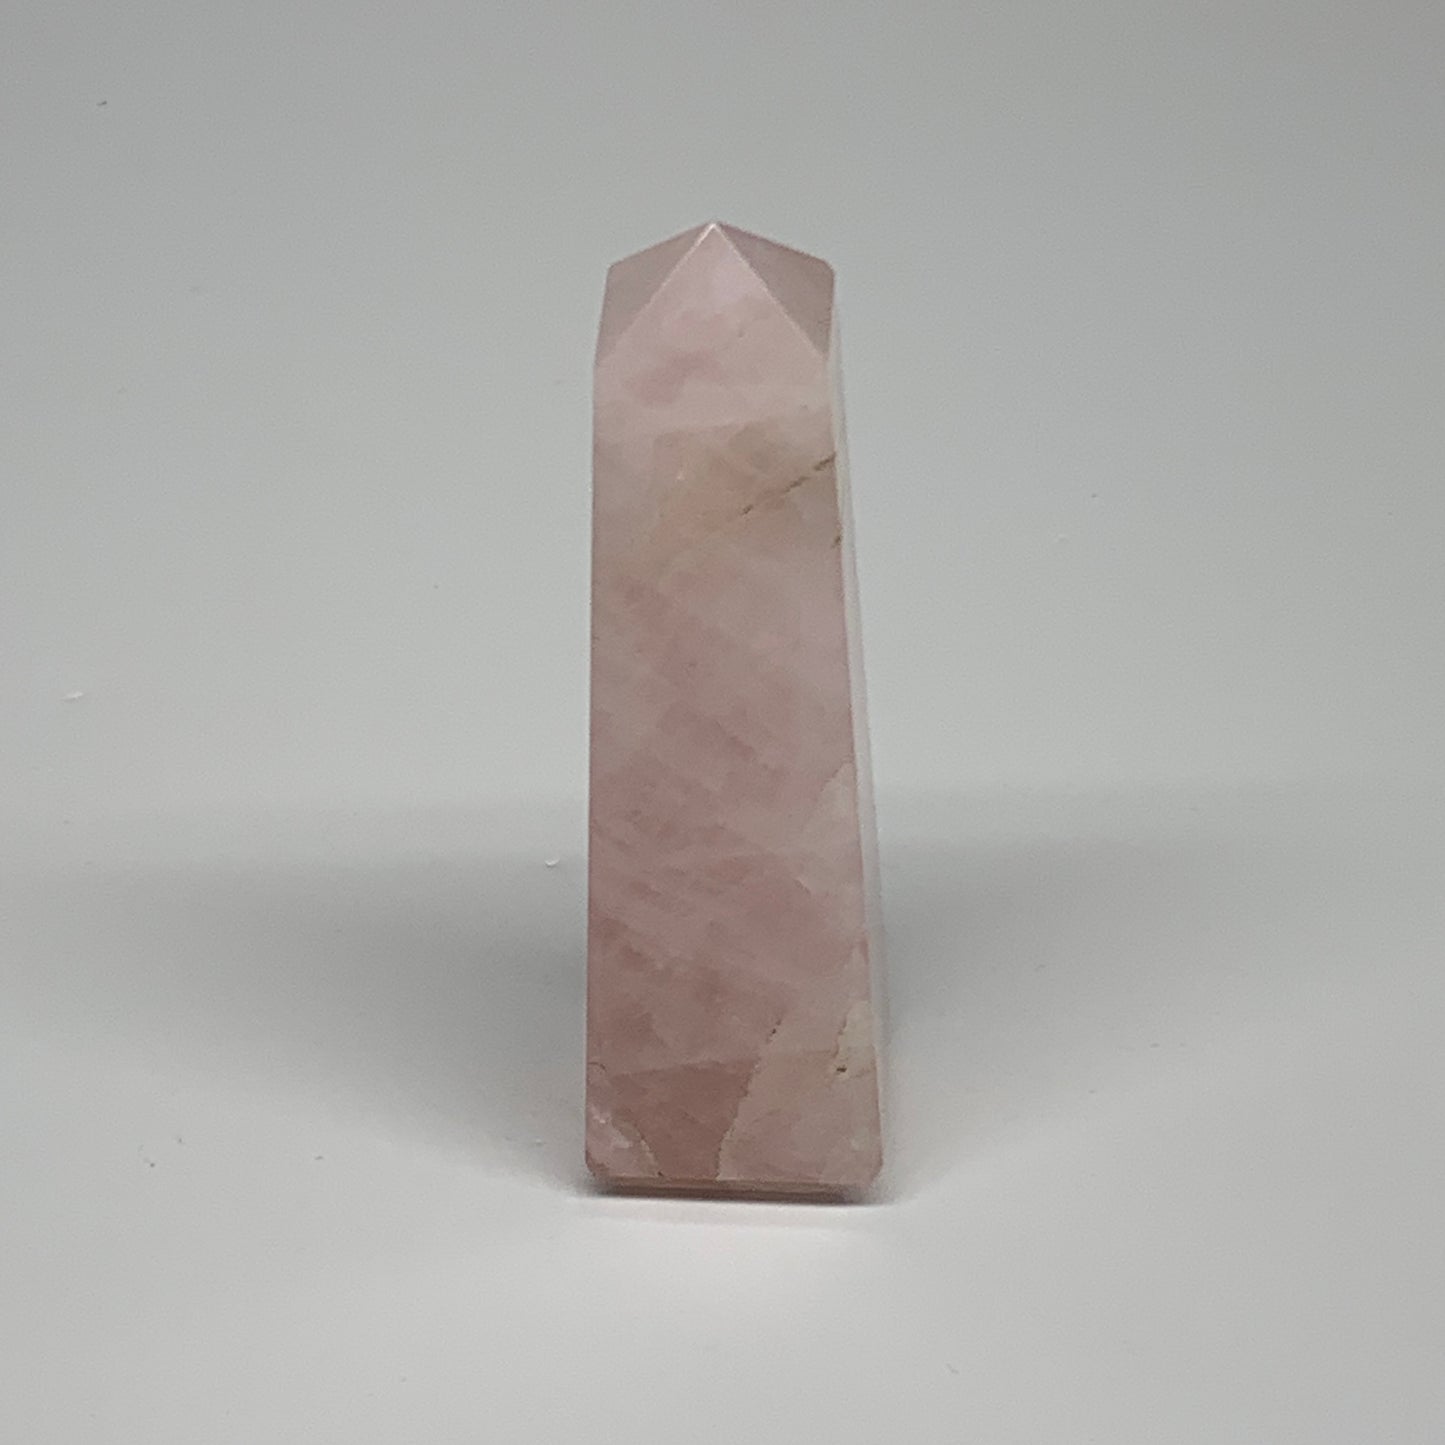 98.5g, 3.4"x0.9"x1", Rose Quartz Tower Obelisk Point Crystal @Brazil, B31395